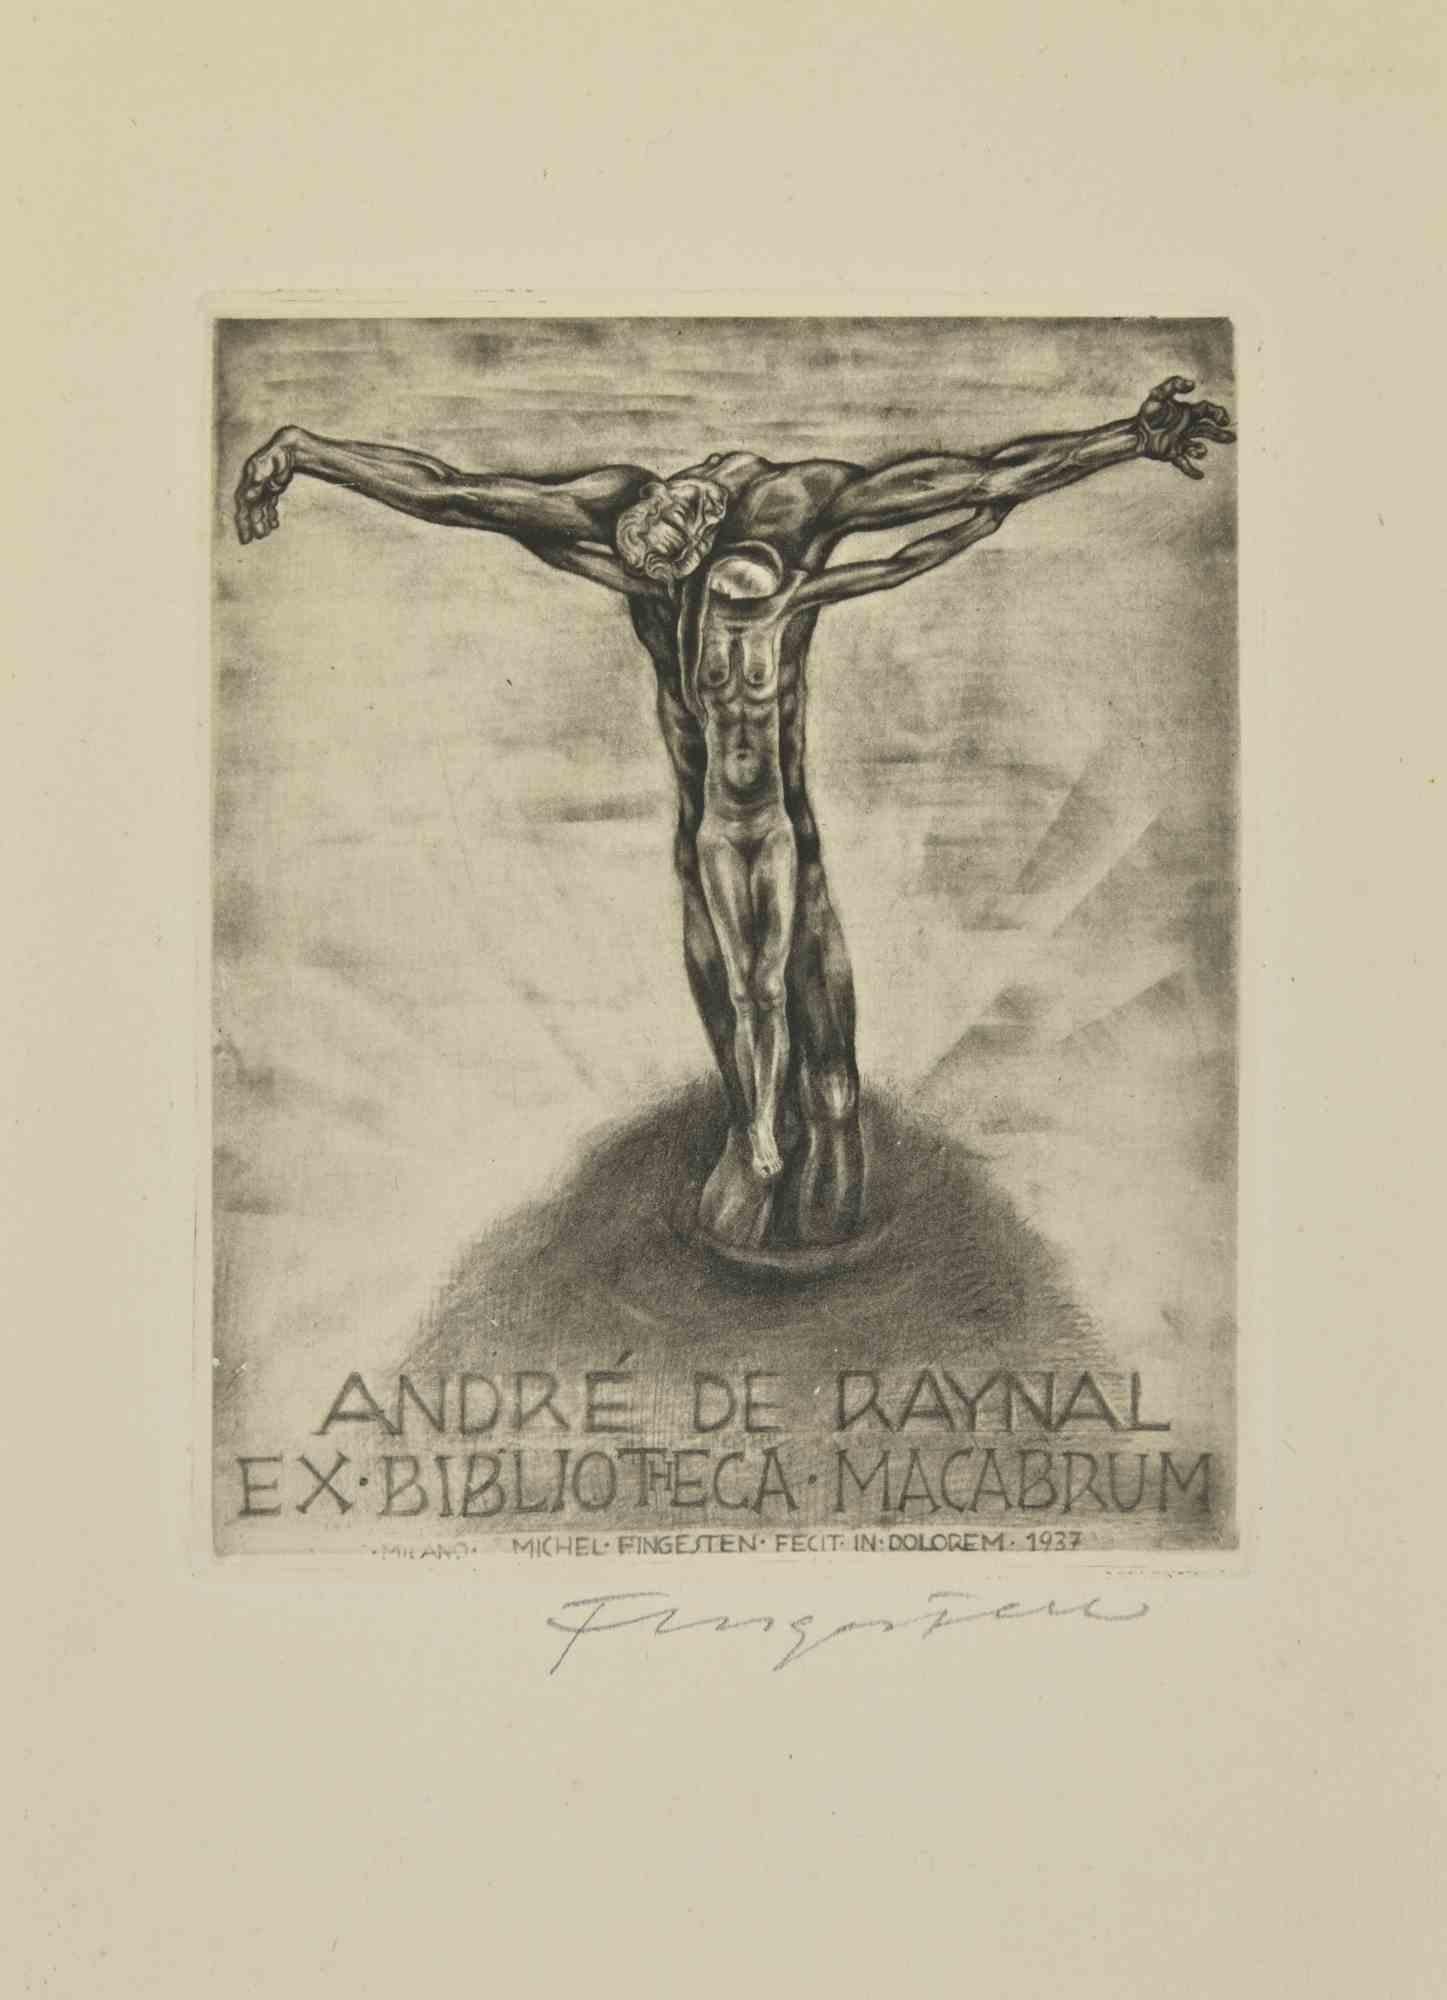 Ex Libris-André de Raynal-Ex Biblioteca Macabru- Etching by M. Fingesten - 1937